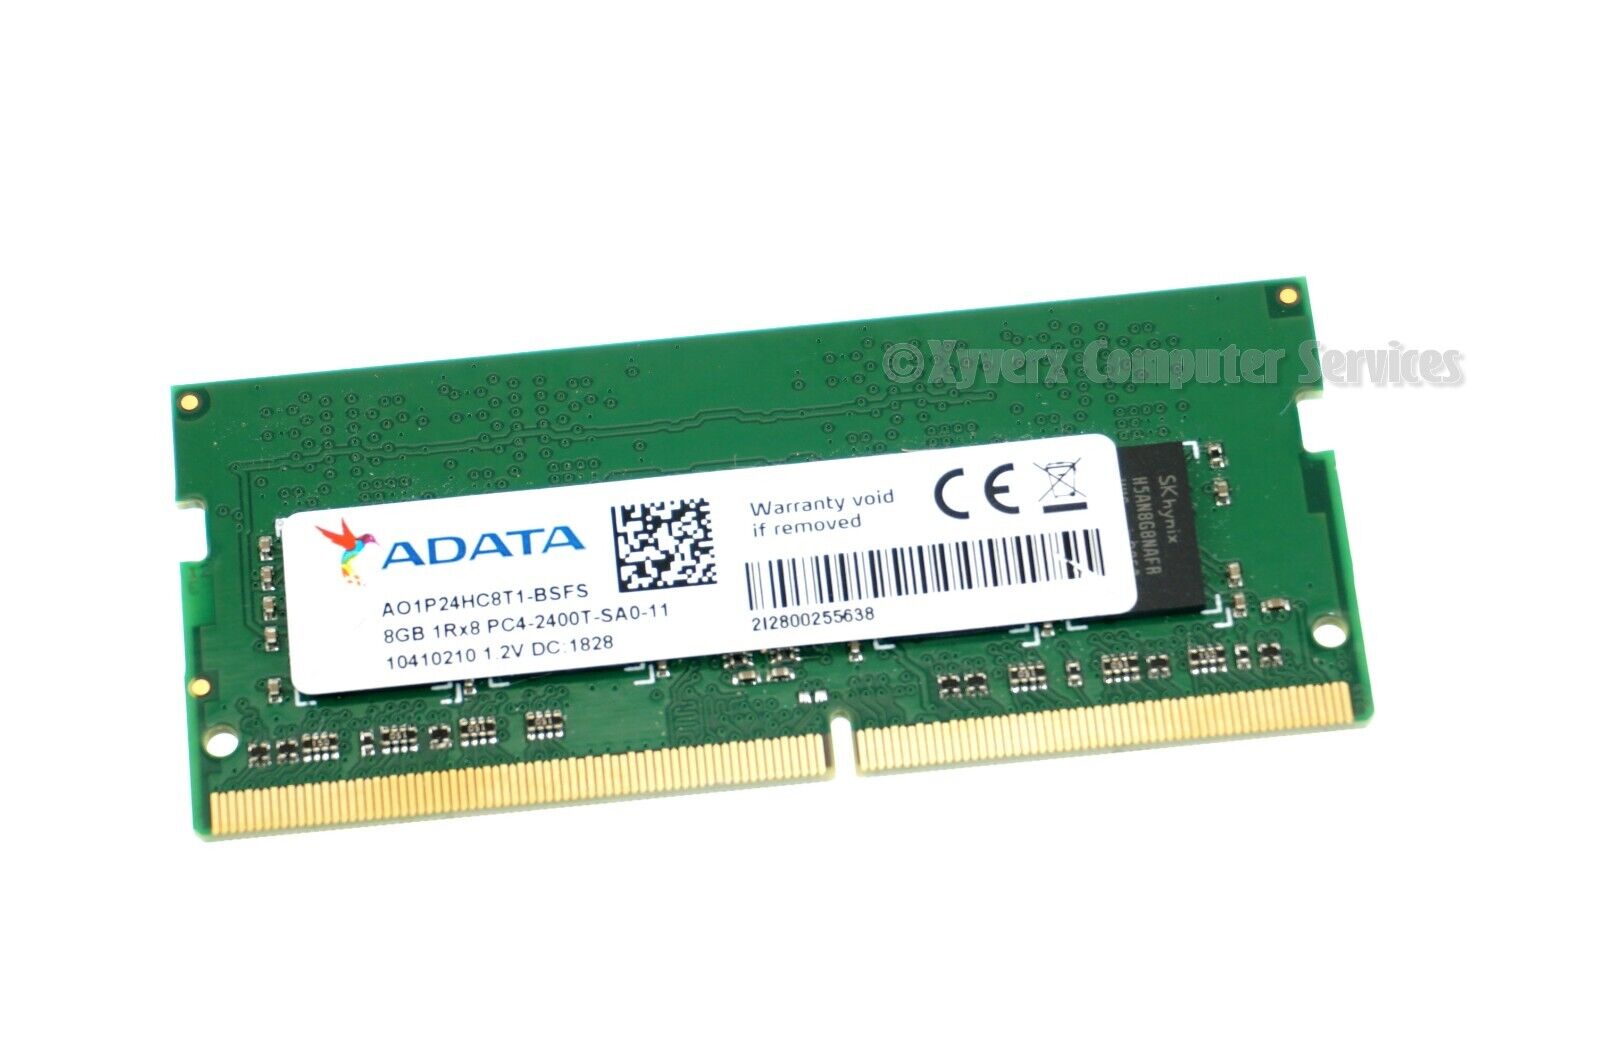 AO1P24HC8T1-BSFS GENUINE ADATA LAPTOP MEMORY 8GB DDR4 PC4-2400T-SA0-11 (CA63)